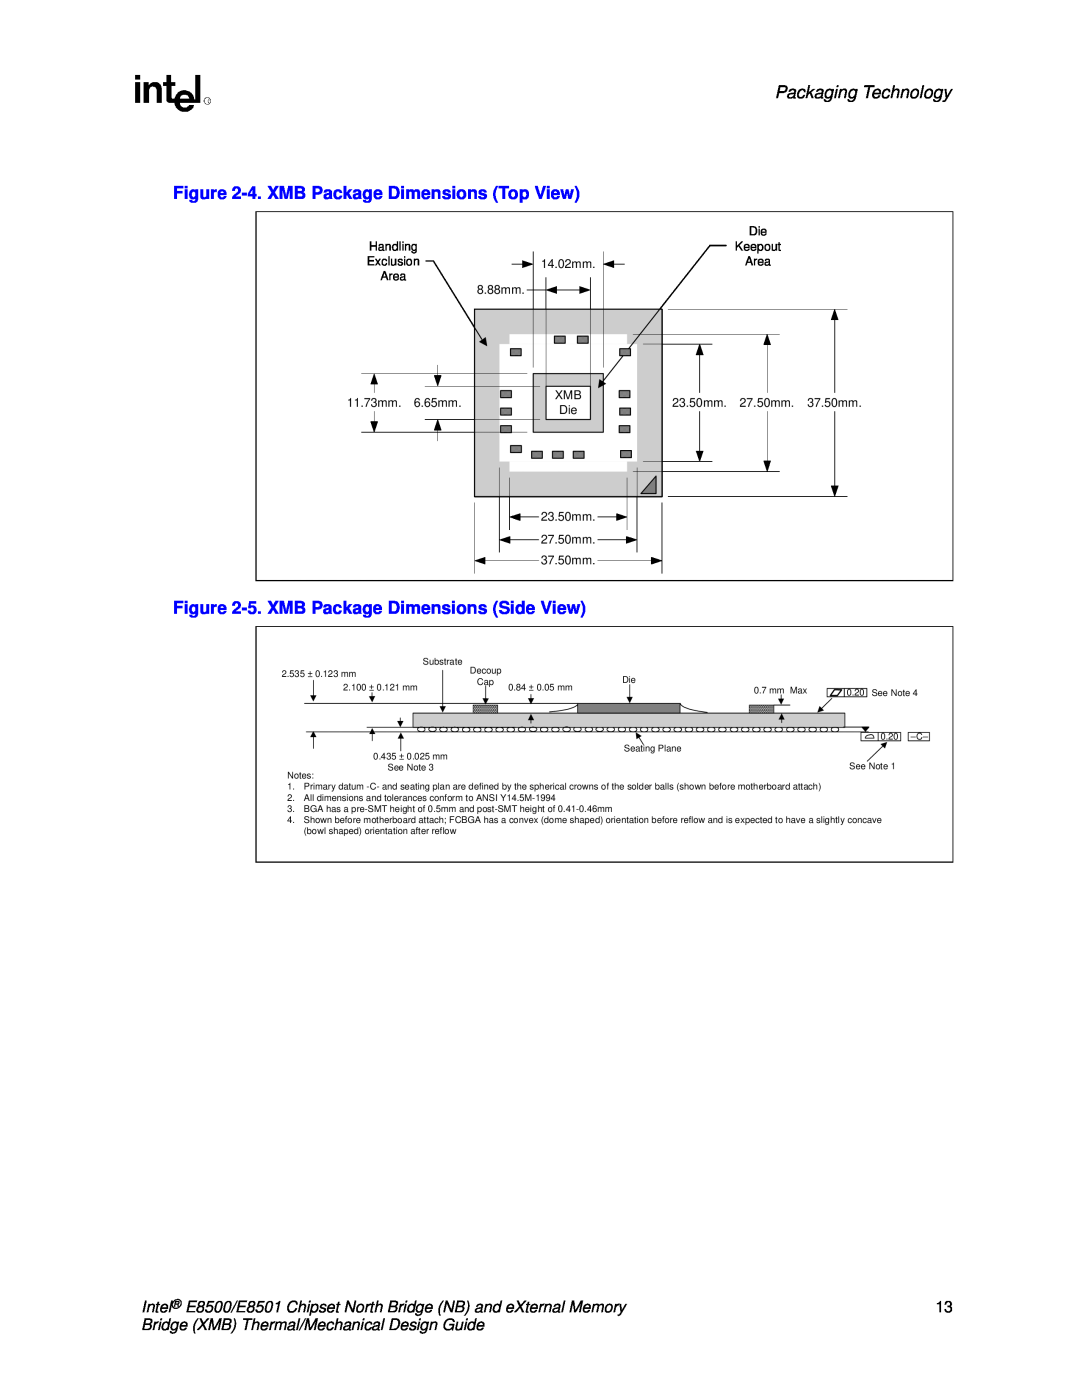 Intel E8501 manual Packaging Technology, 4.XMB Package Dimensions Top View, 5.XMB Package Dimensions Side View 